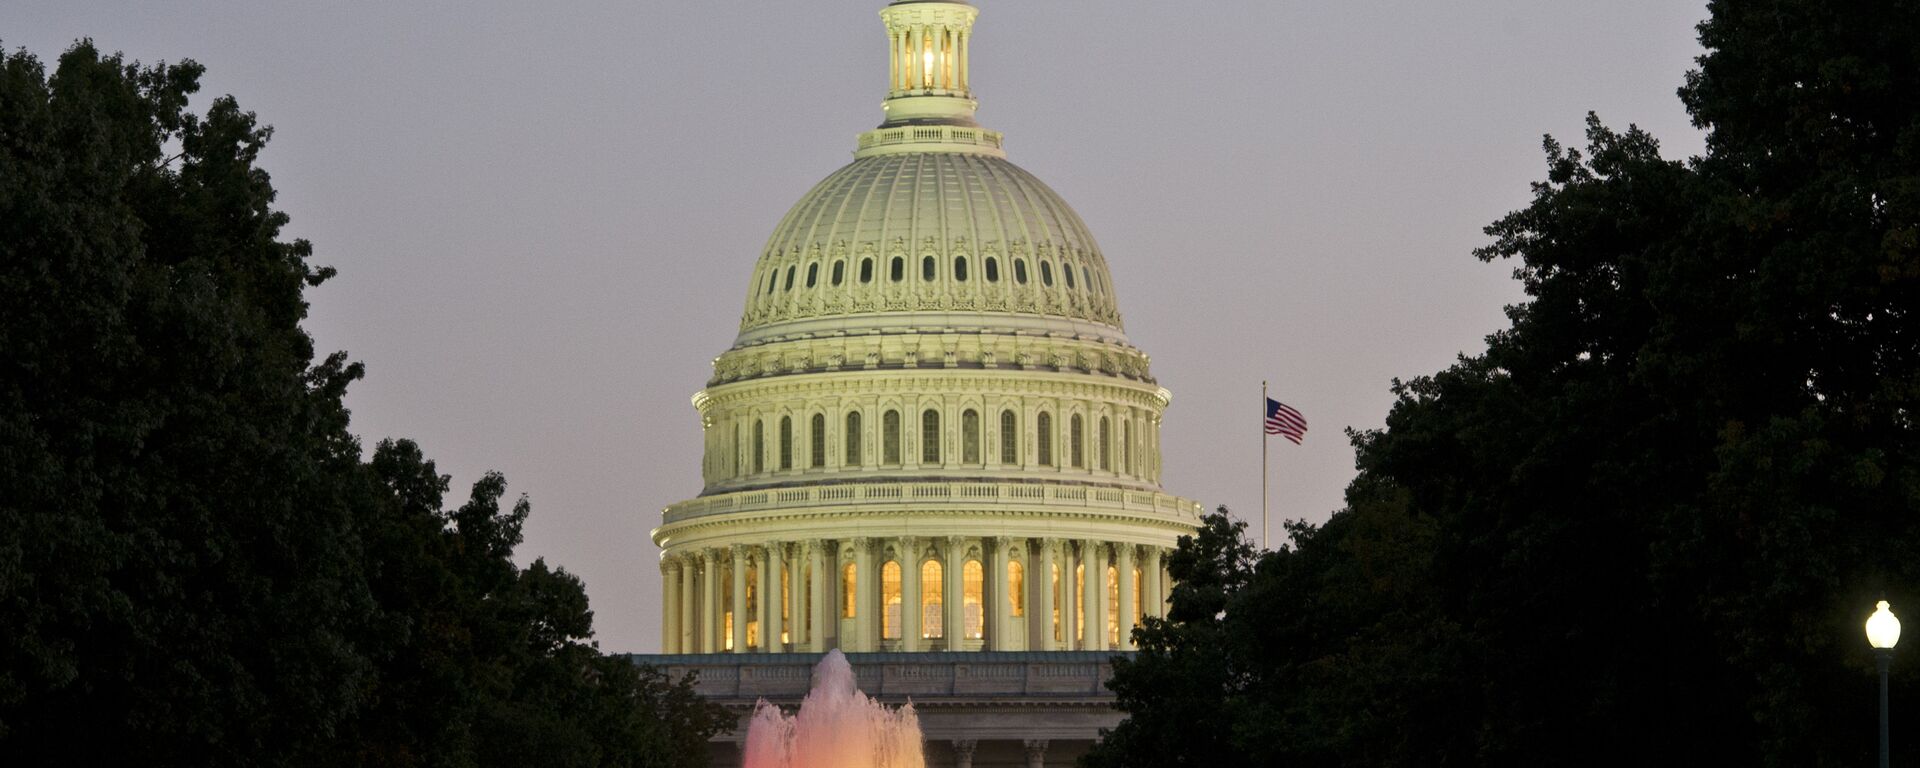 The US Congress building. (File) - Sputnik International, 1920, 29.05.2021